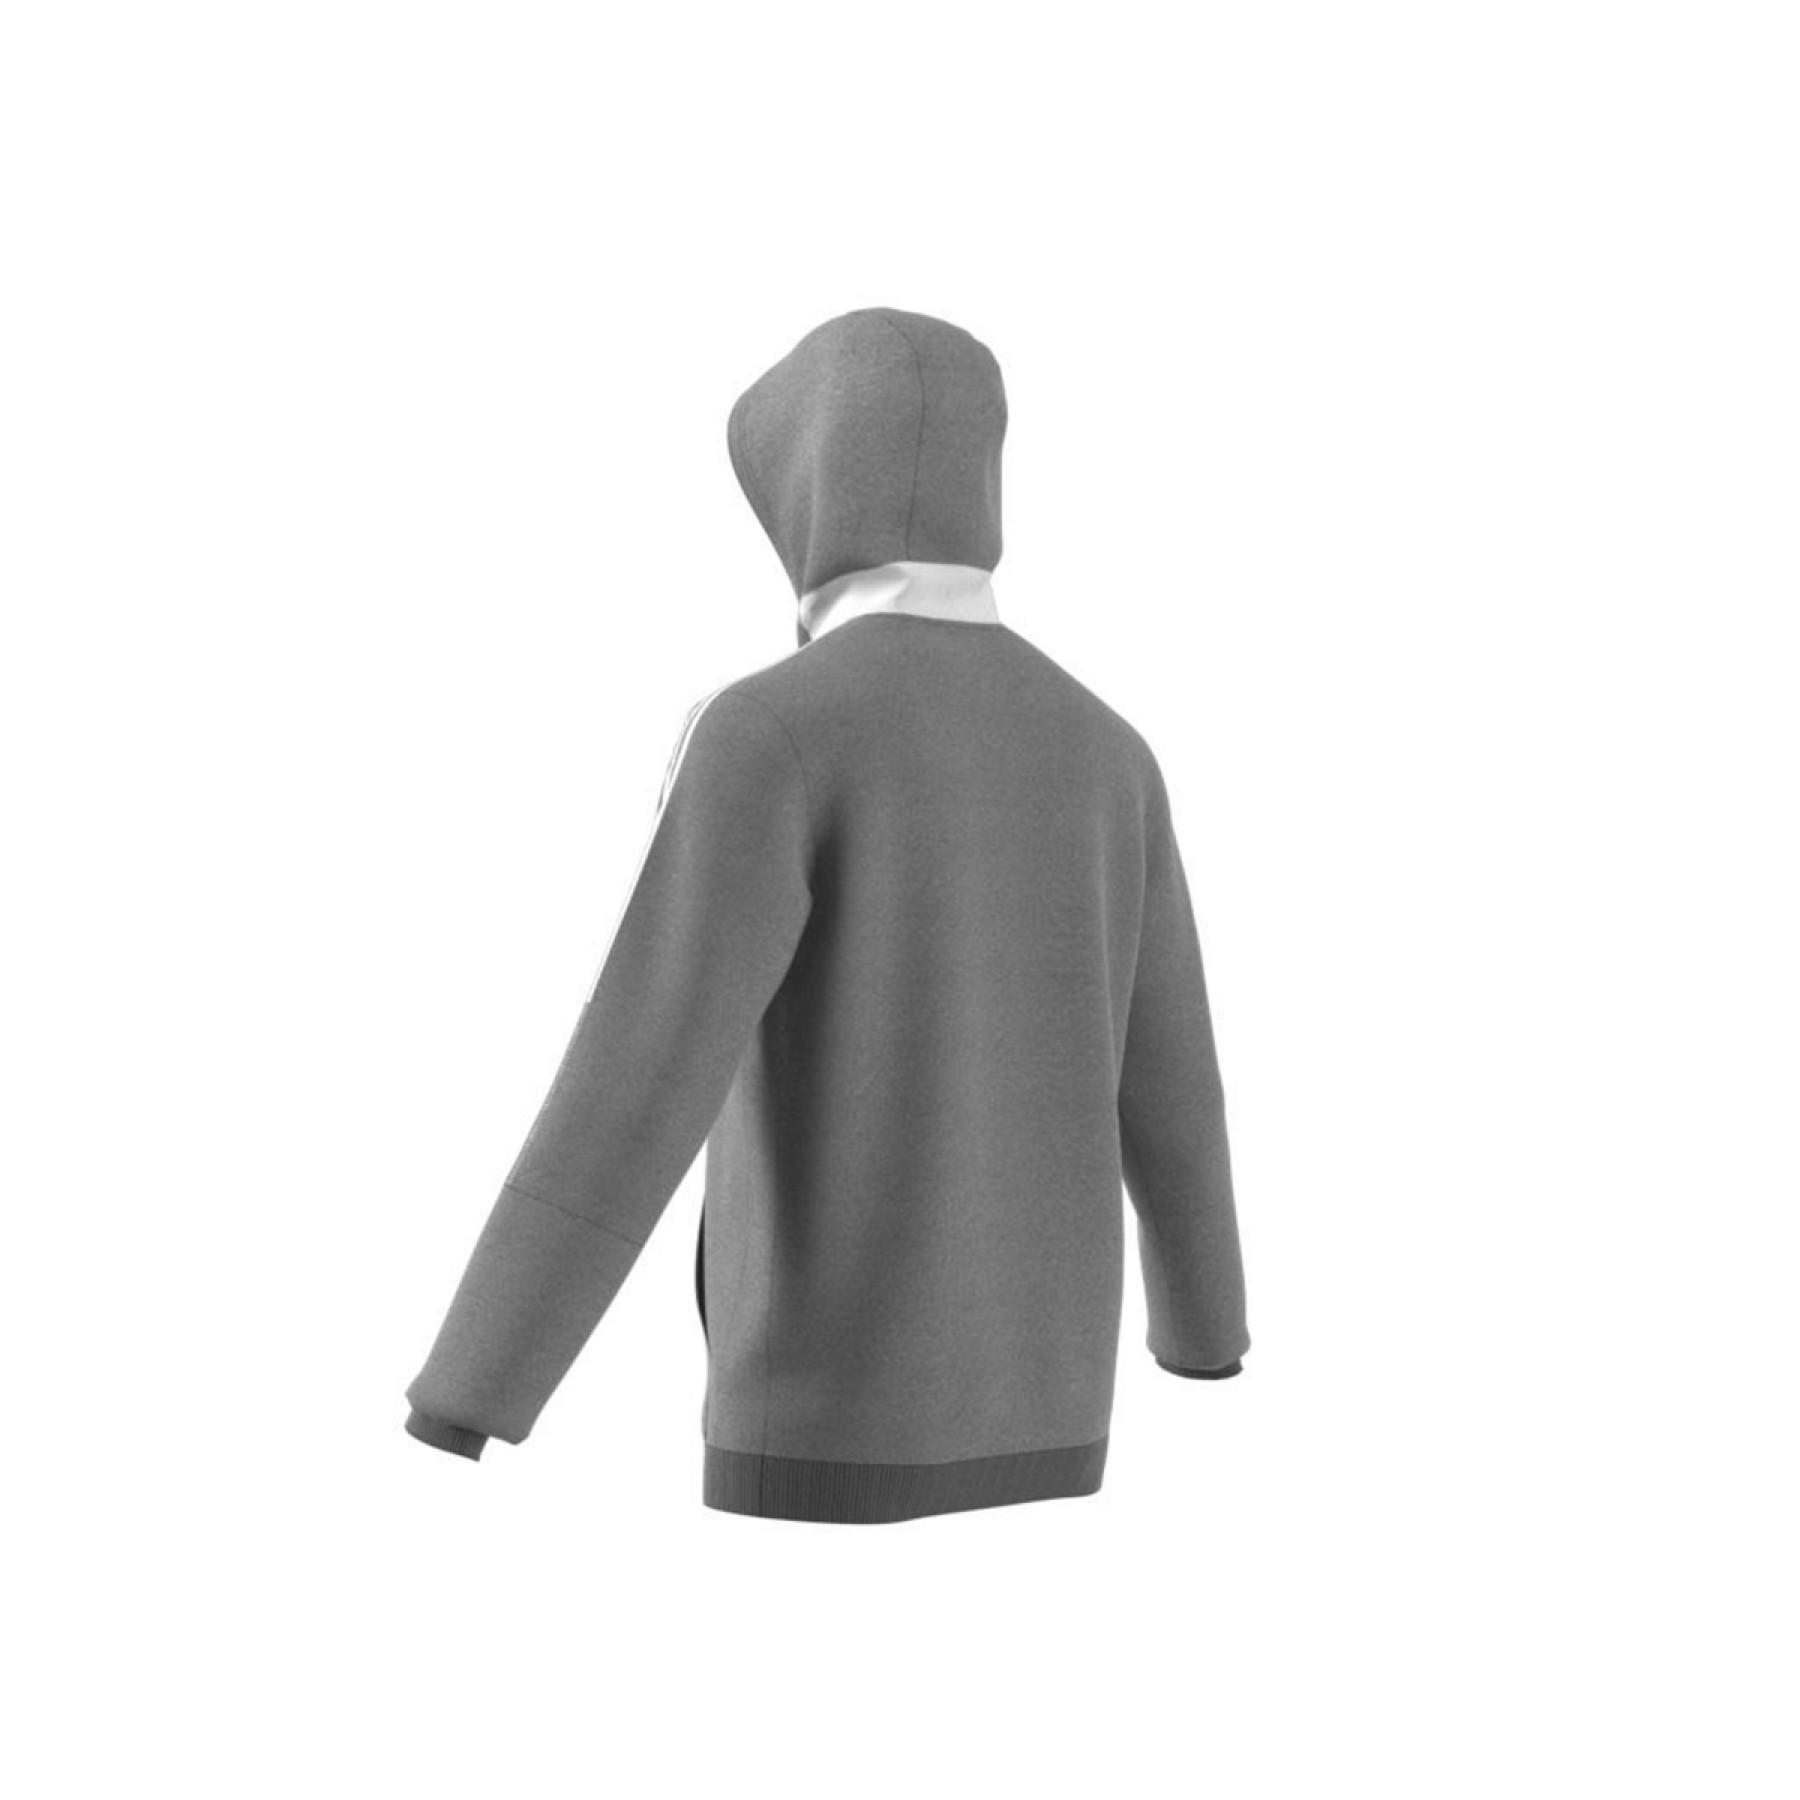 Hooded sweatshirt adidas Tiro 21 Sweatshirt